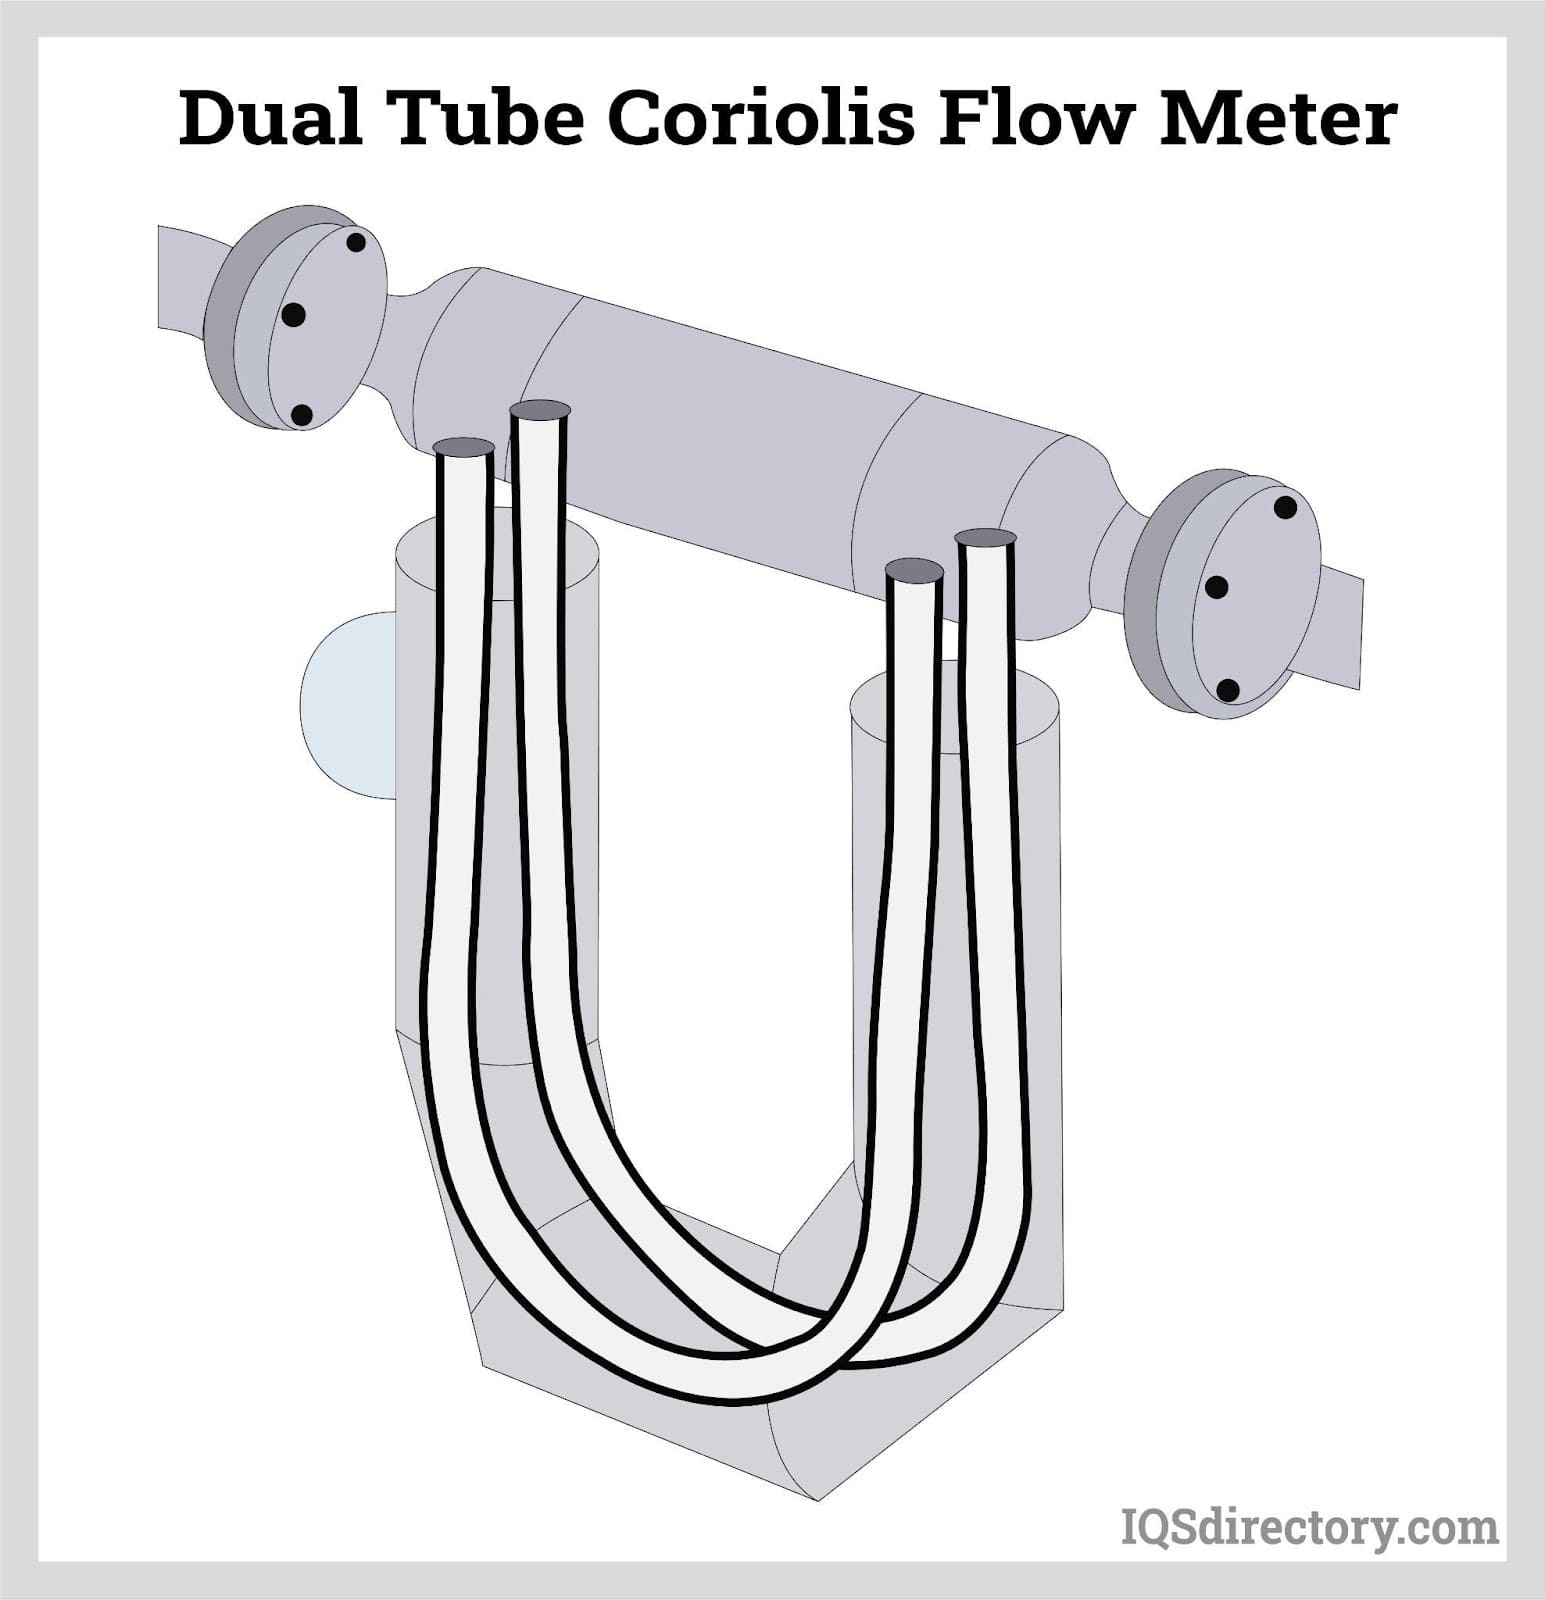 langzaam Zo snel als een flits schandaal Flow Meters: What are they? Uses, Types, Installation